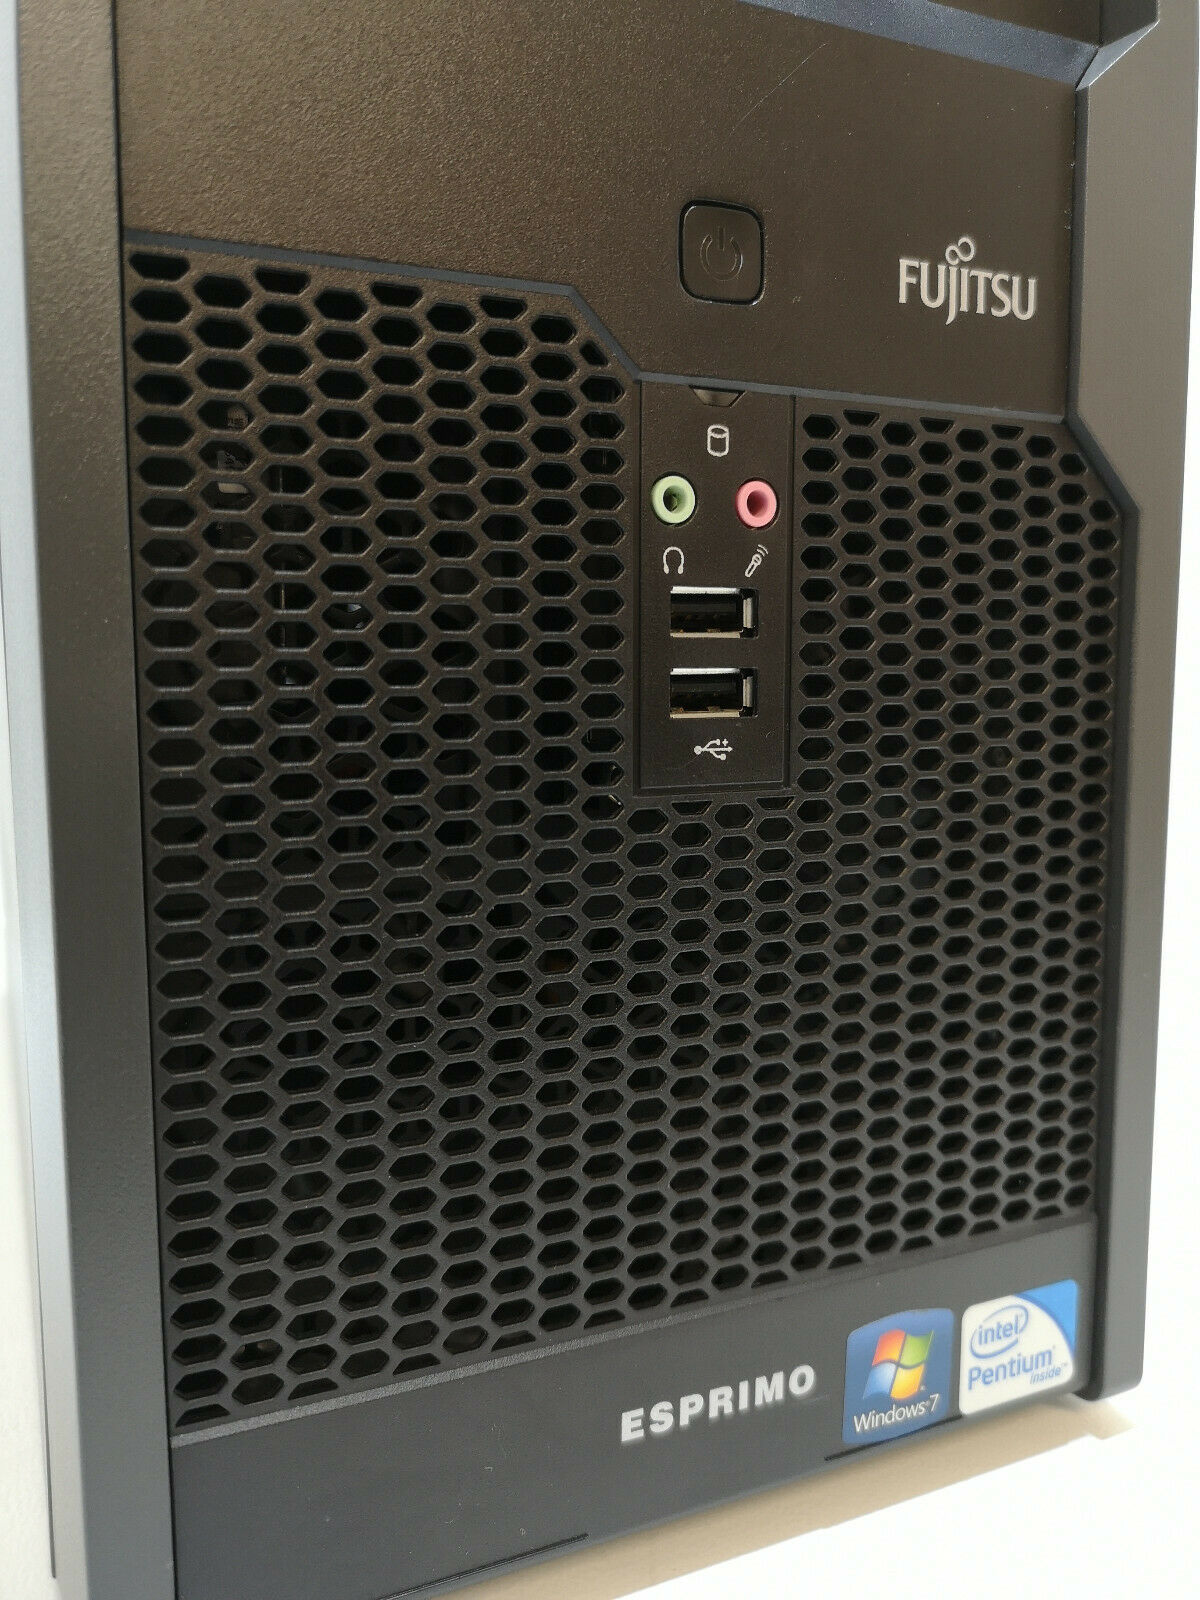 Refurbished Fujitsu Esprimo P2560 Desktop Tower PC